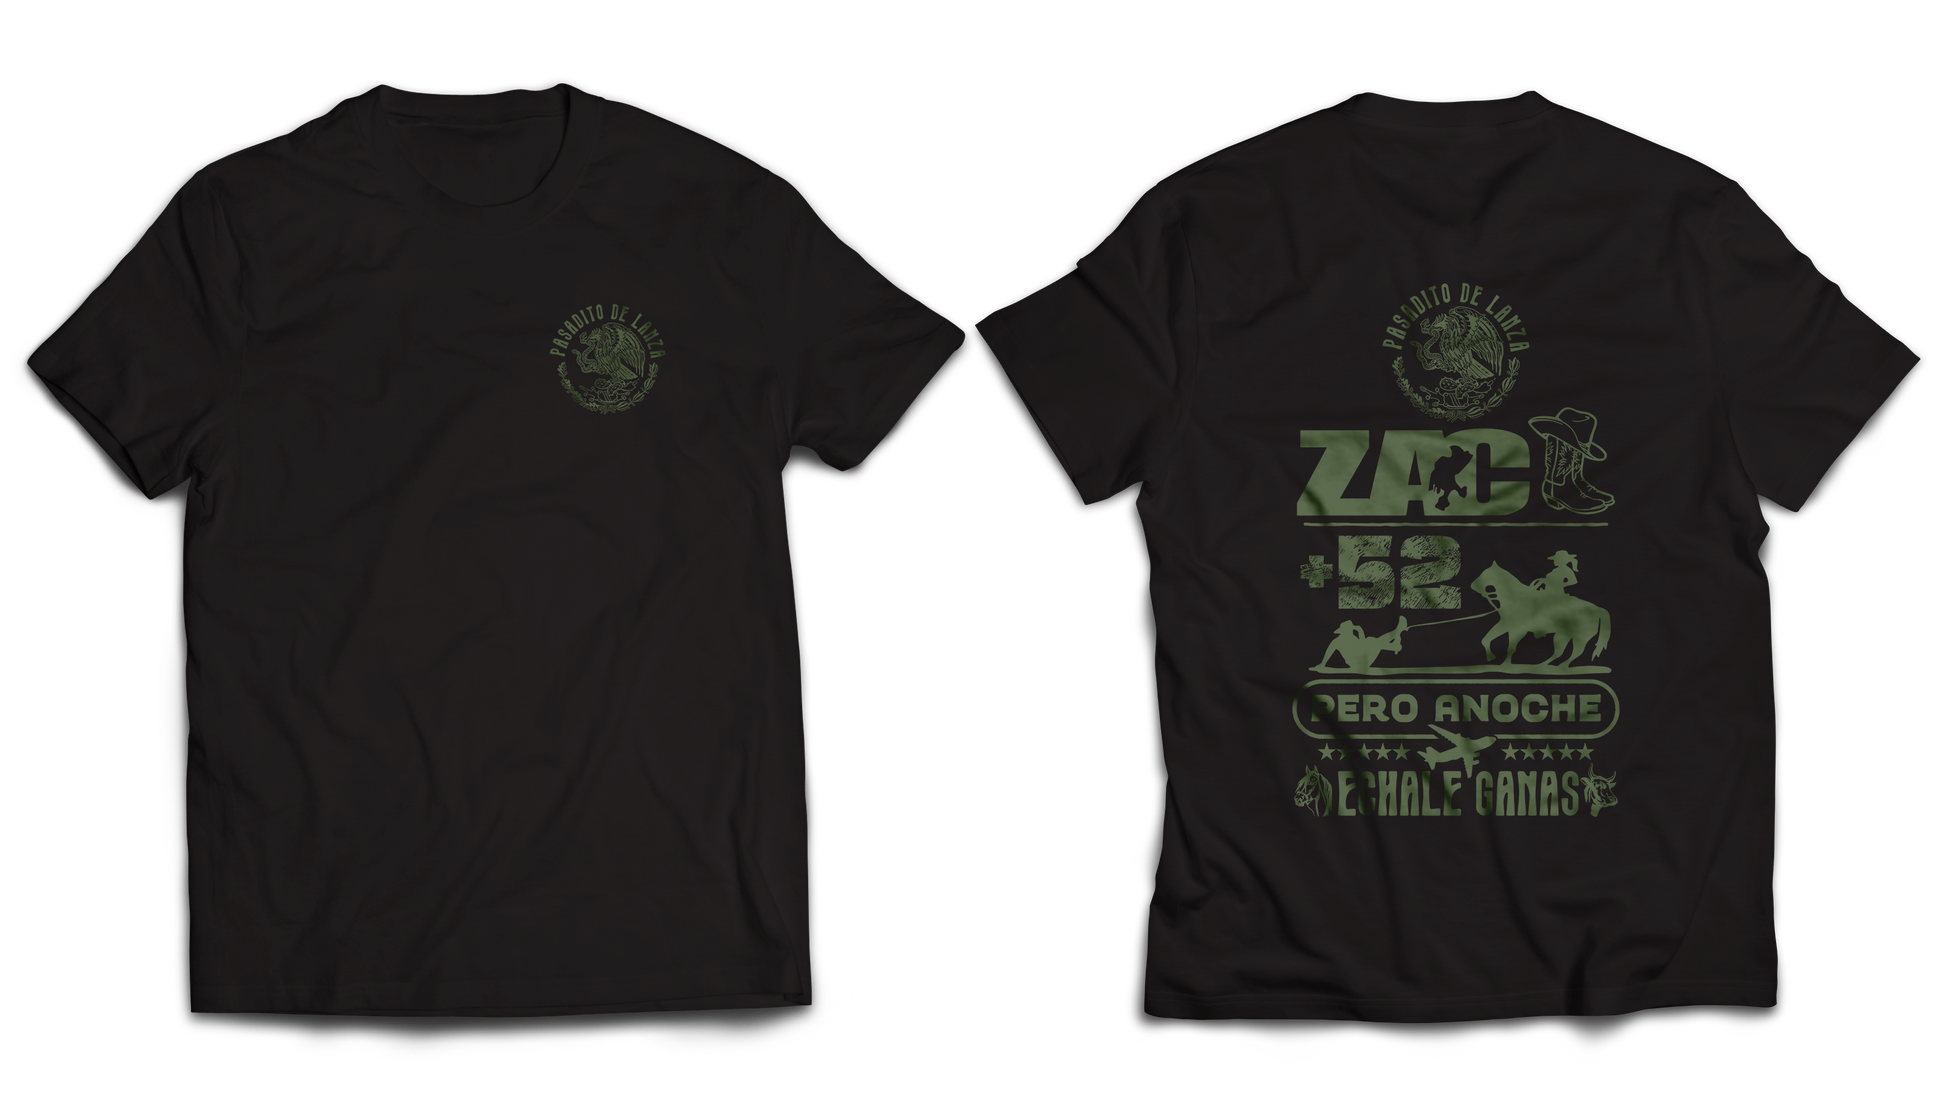 ZAC+52 Screen-printed on BlackT-Shirt - Golden State Print